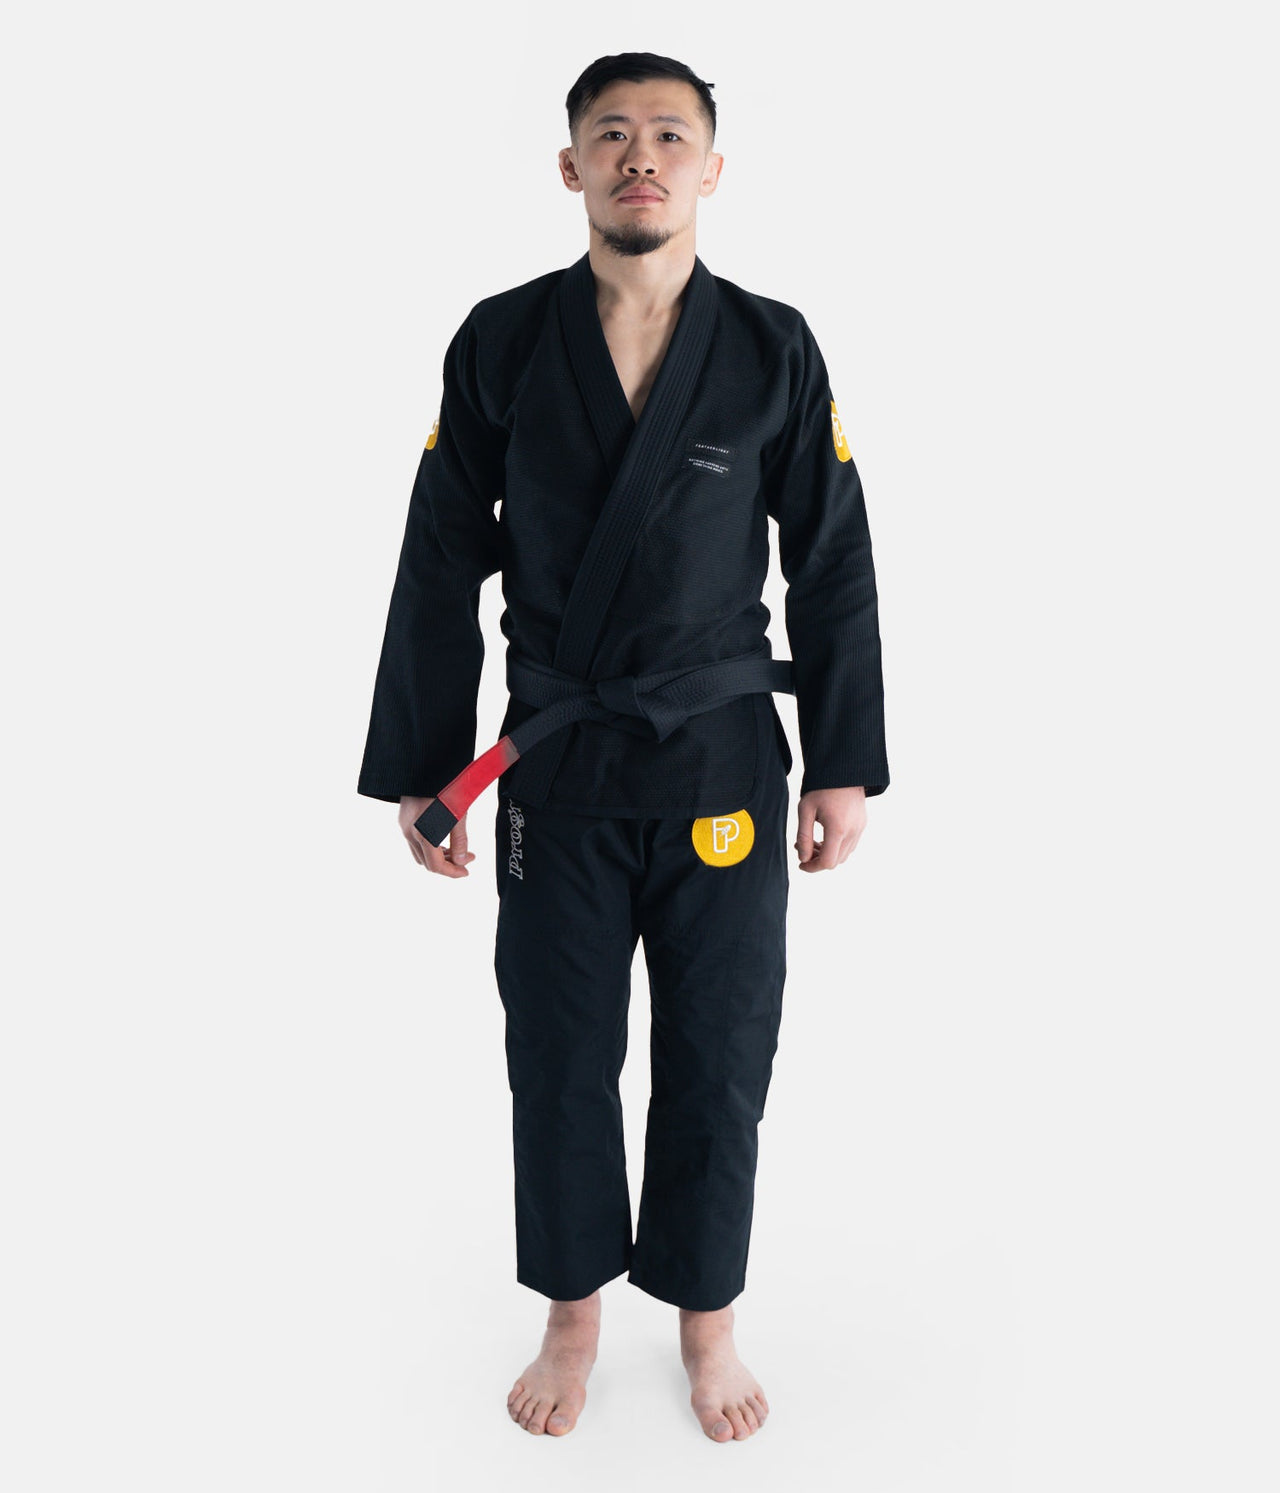 【お取寄せ商品】Progress Jiu Jitsu / Featherlight Lightweight Competition 柔術衣 Black